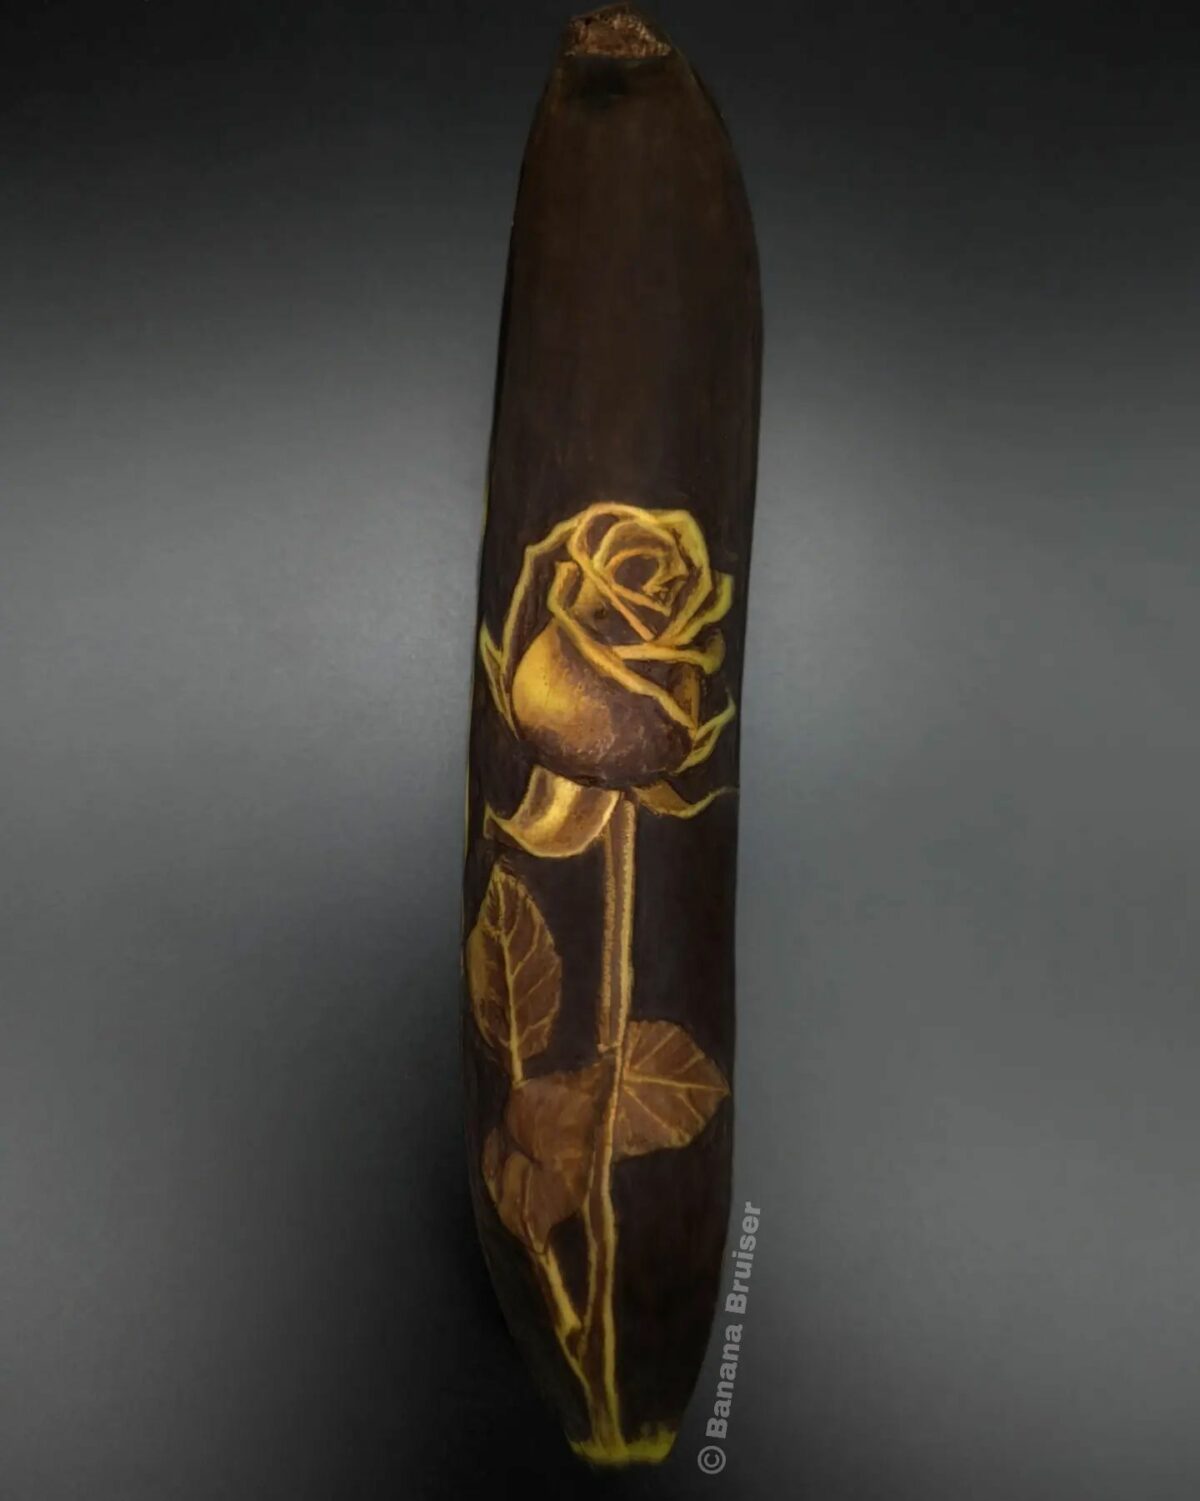 The Bruised Banana Art Of Anna Chojnicka 11